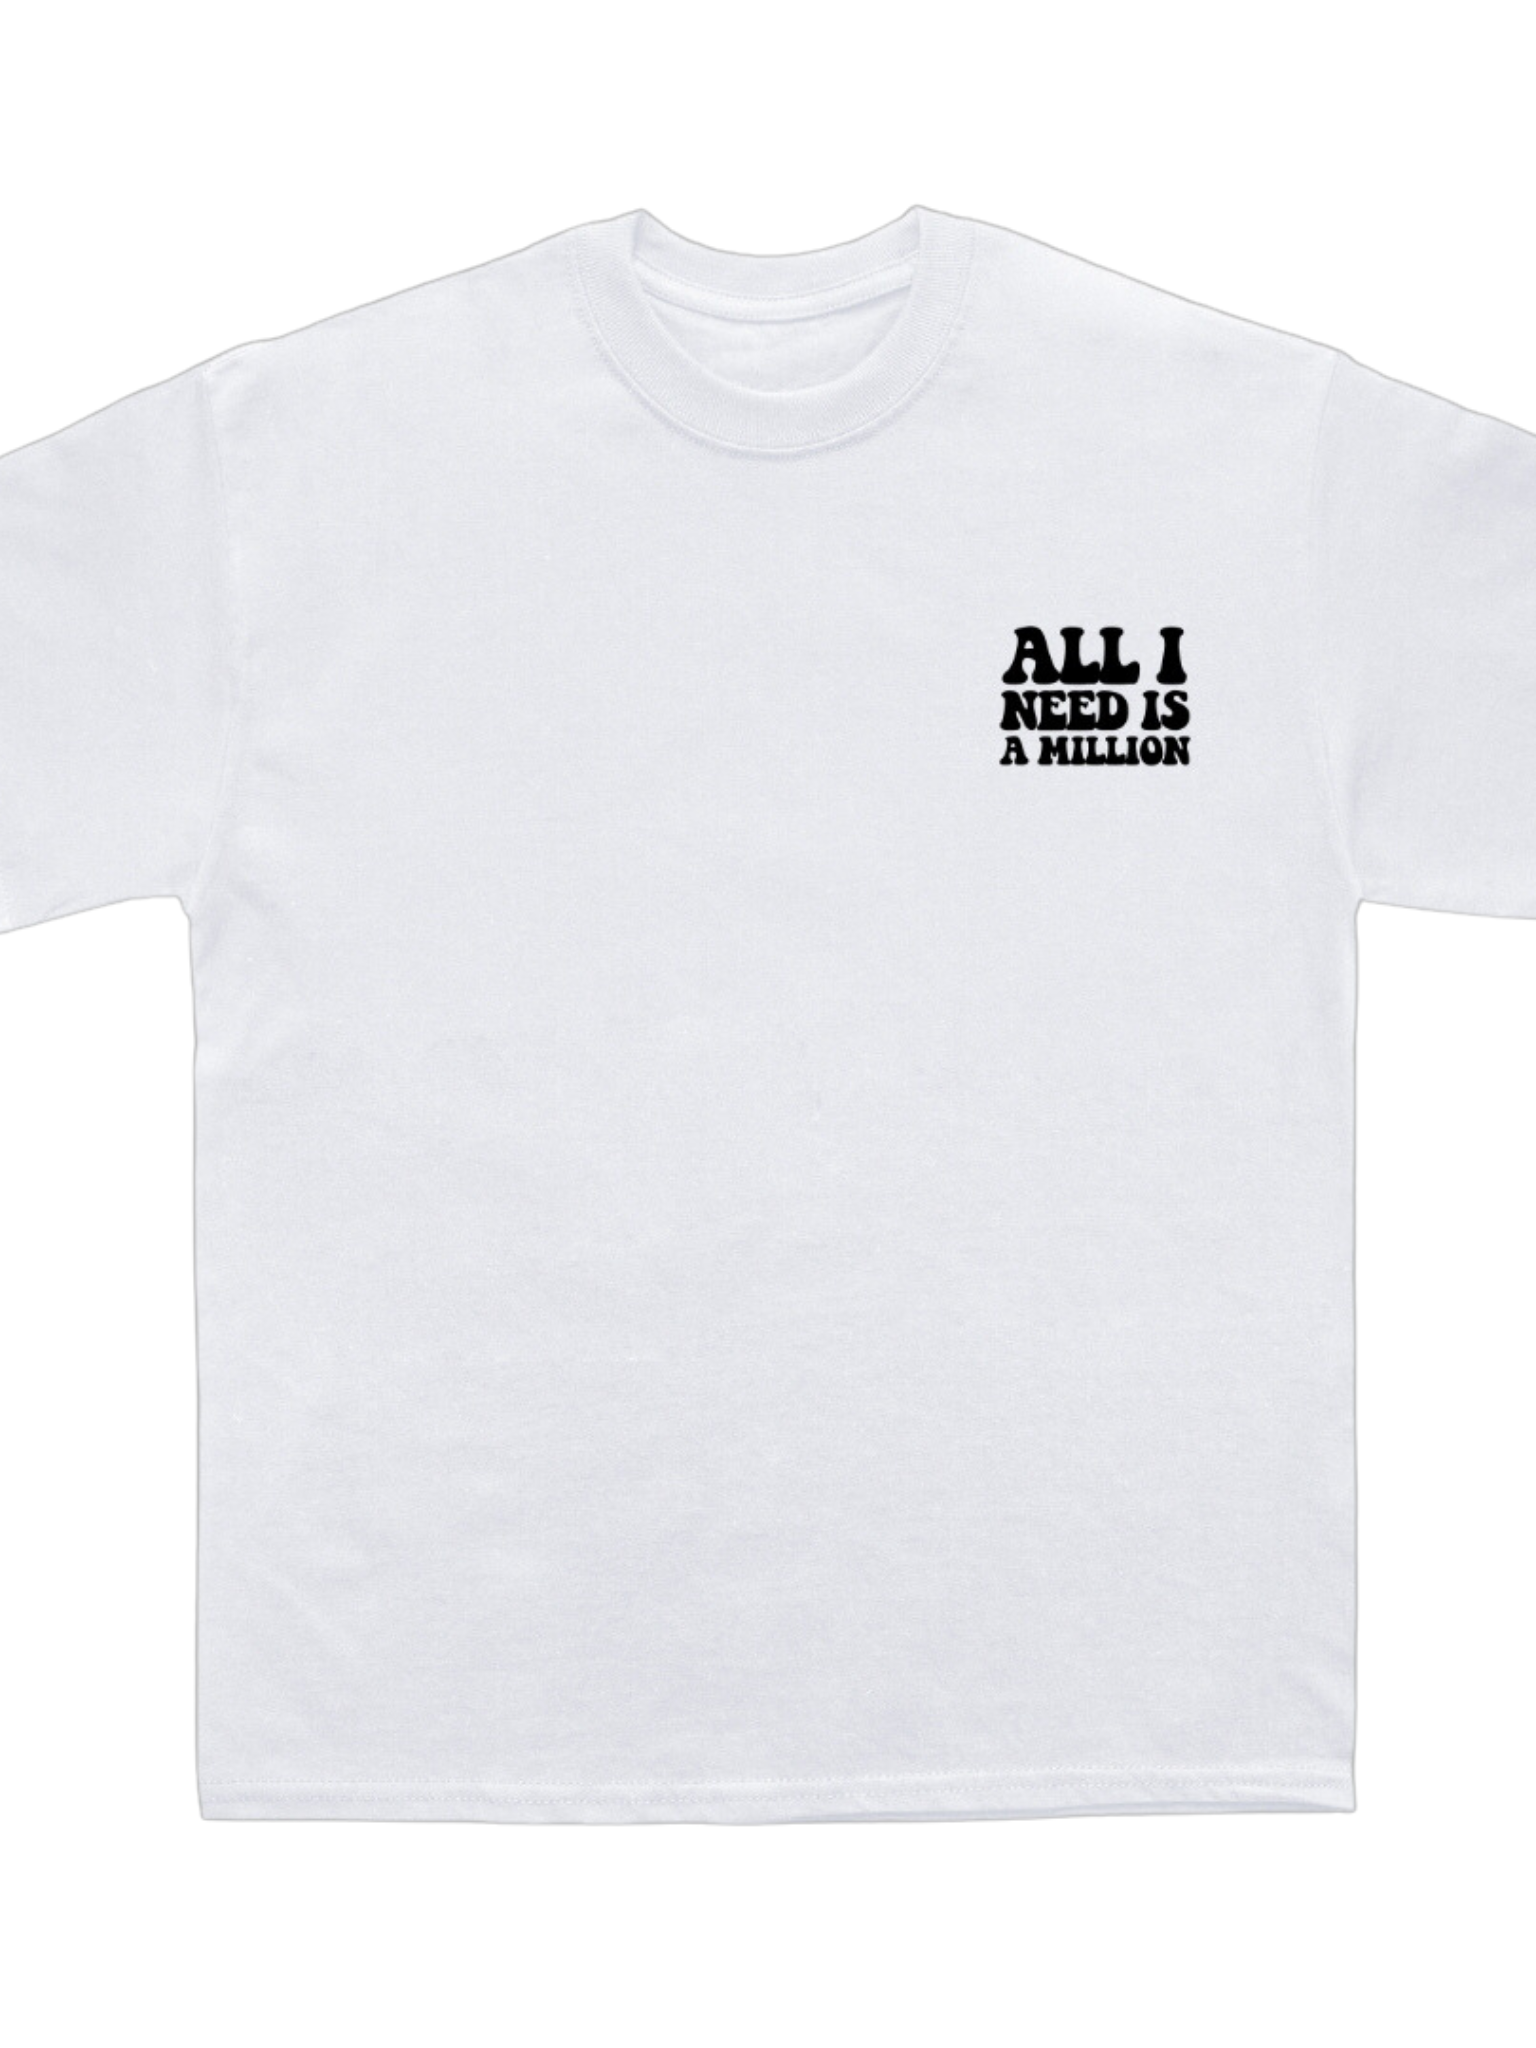 White "A Milli" T-Shirt (QUICK STRIKE)